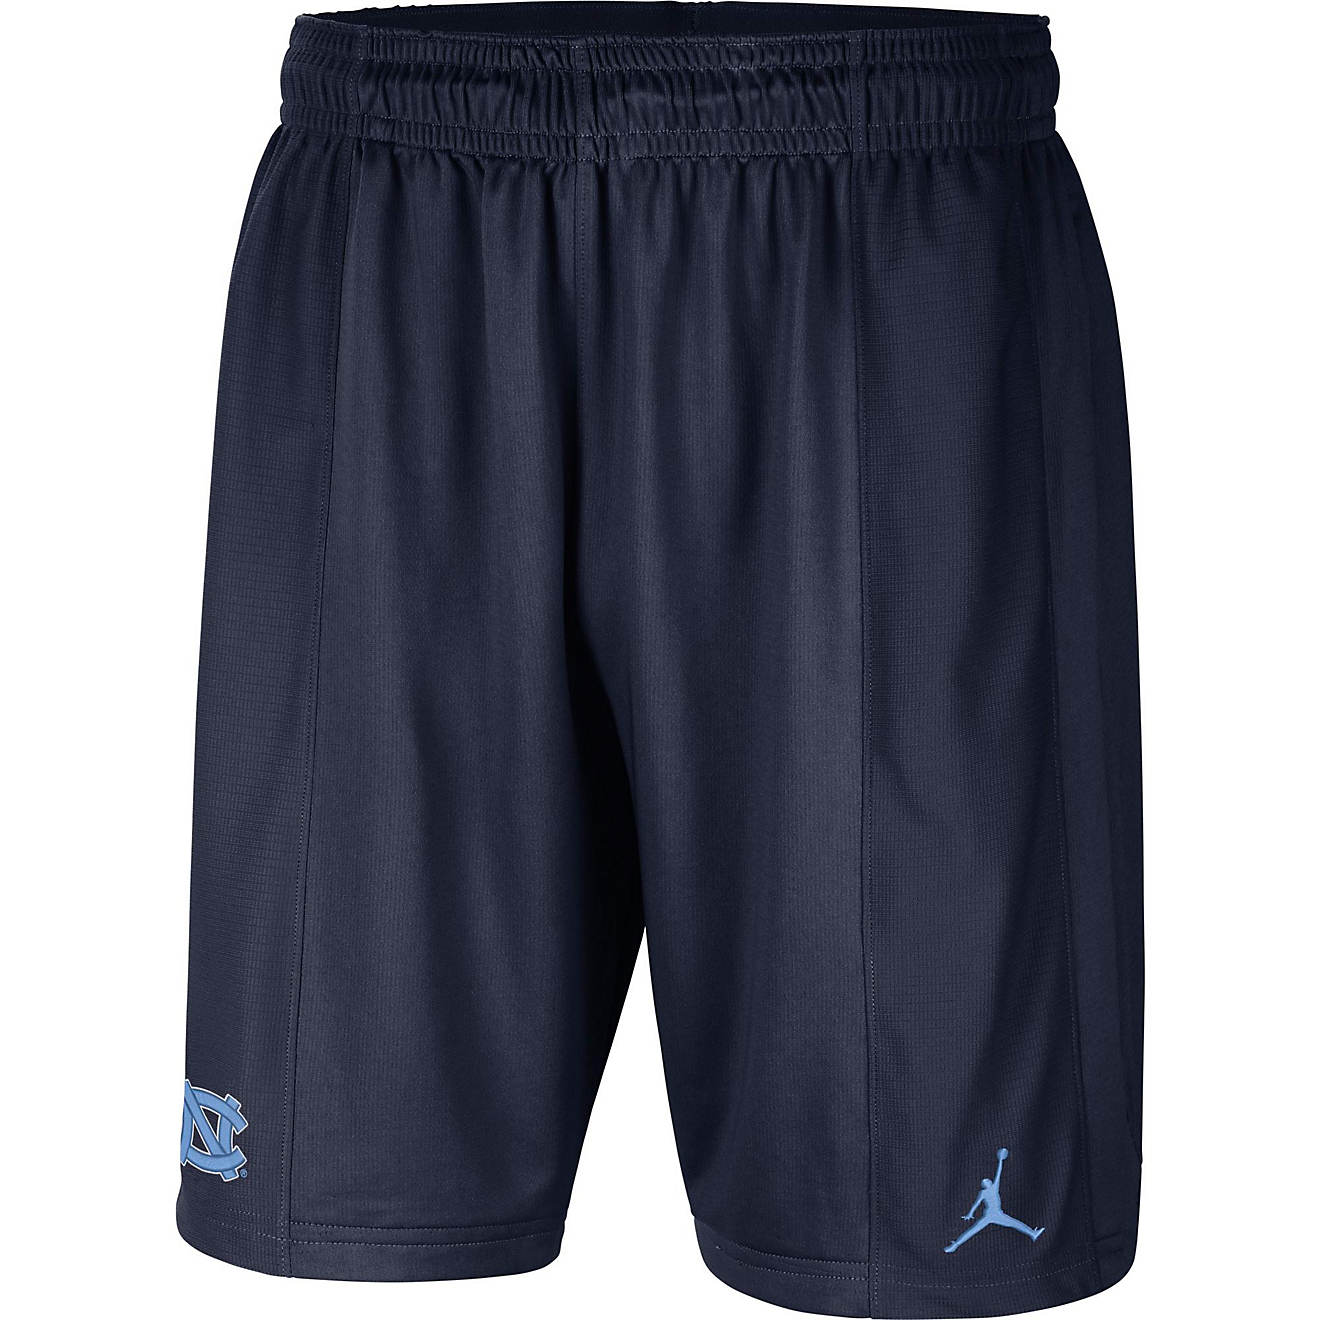 Jordan Men’s University of North Carolina Knit Shorts 10 in | Academy